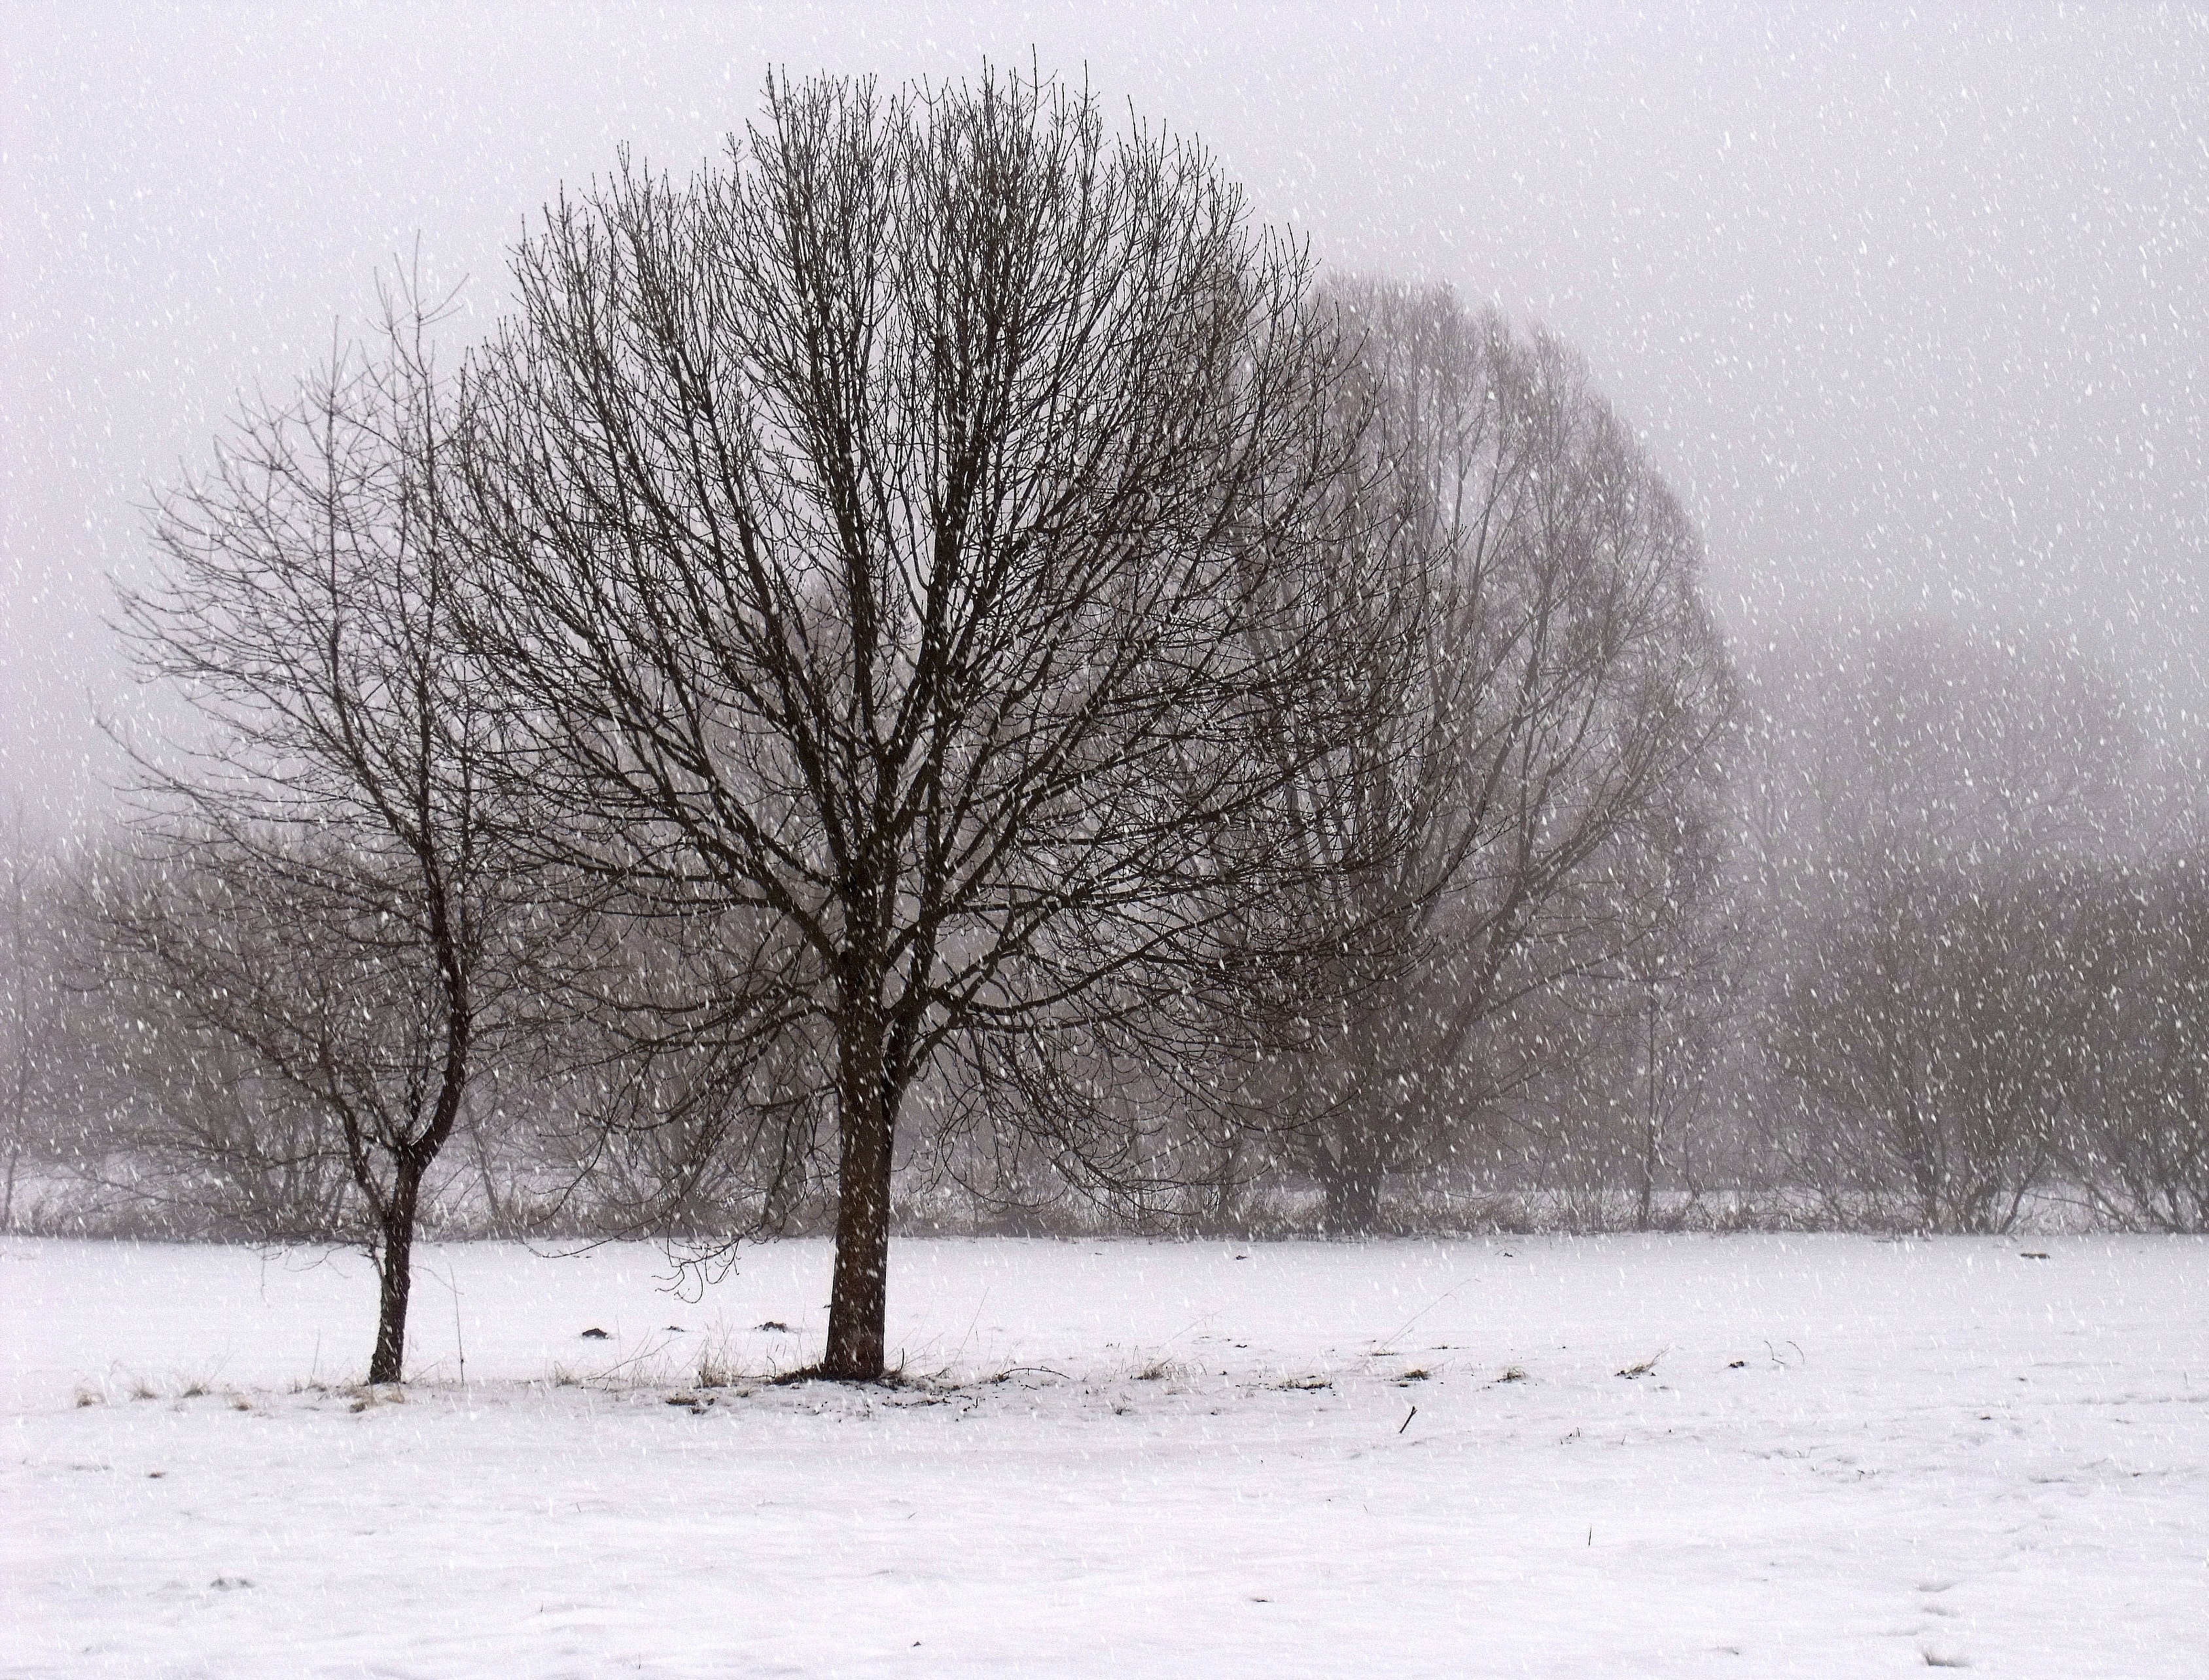 snow coated trees